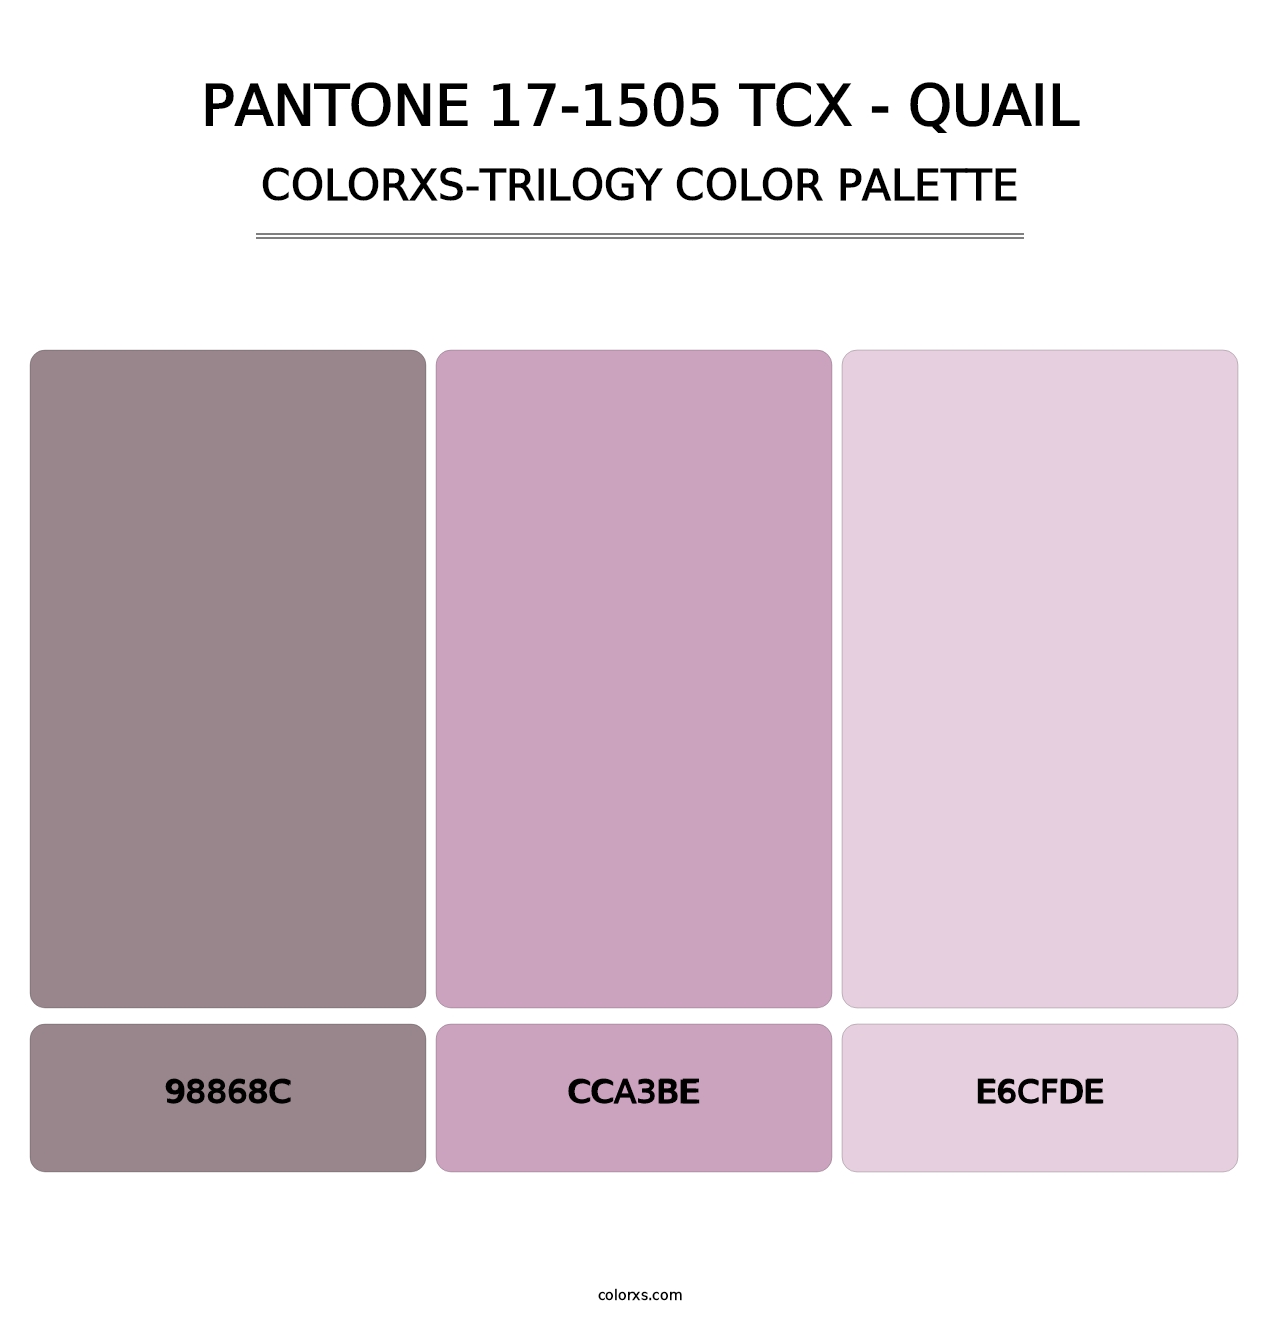 PANTONE 17-1505 TCX - Quail - Colorxs Trilogy Palette